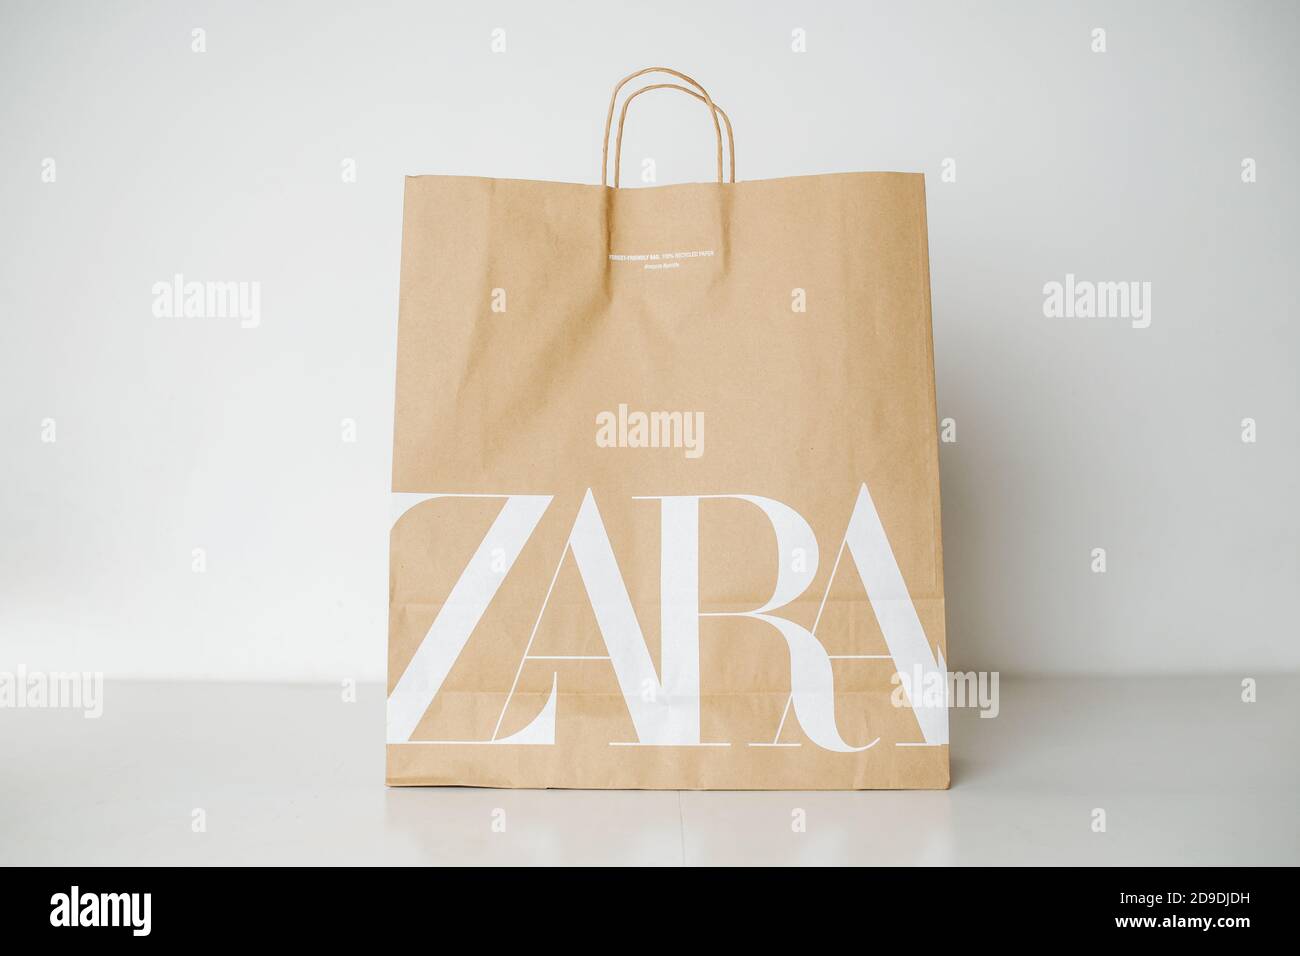 Zara packaging immagini e fotografie stock ad alta risoluzione - Alamy